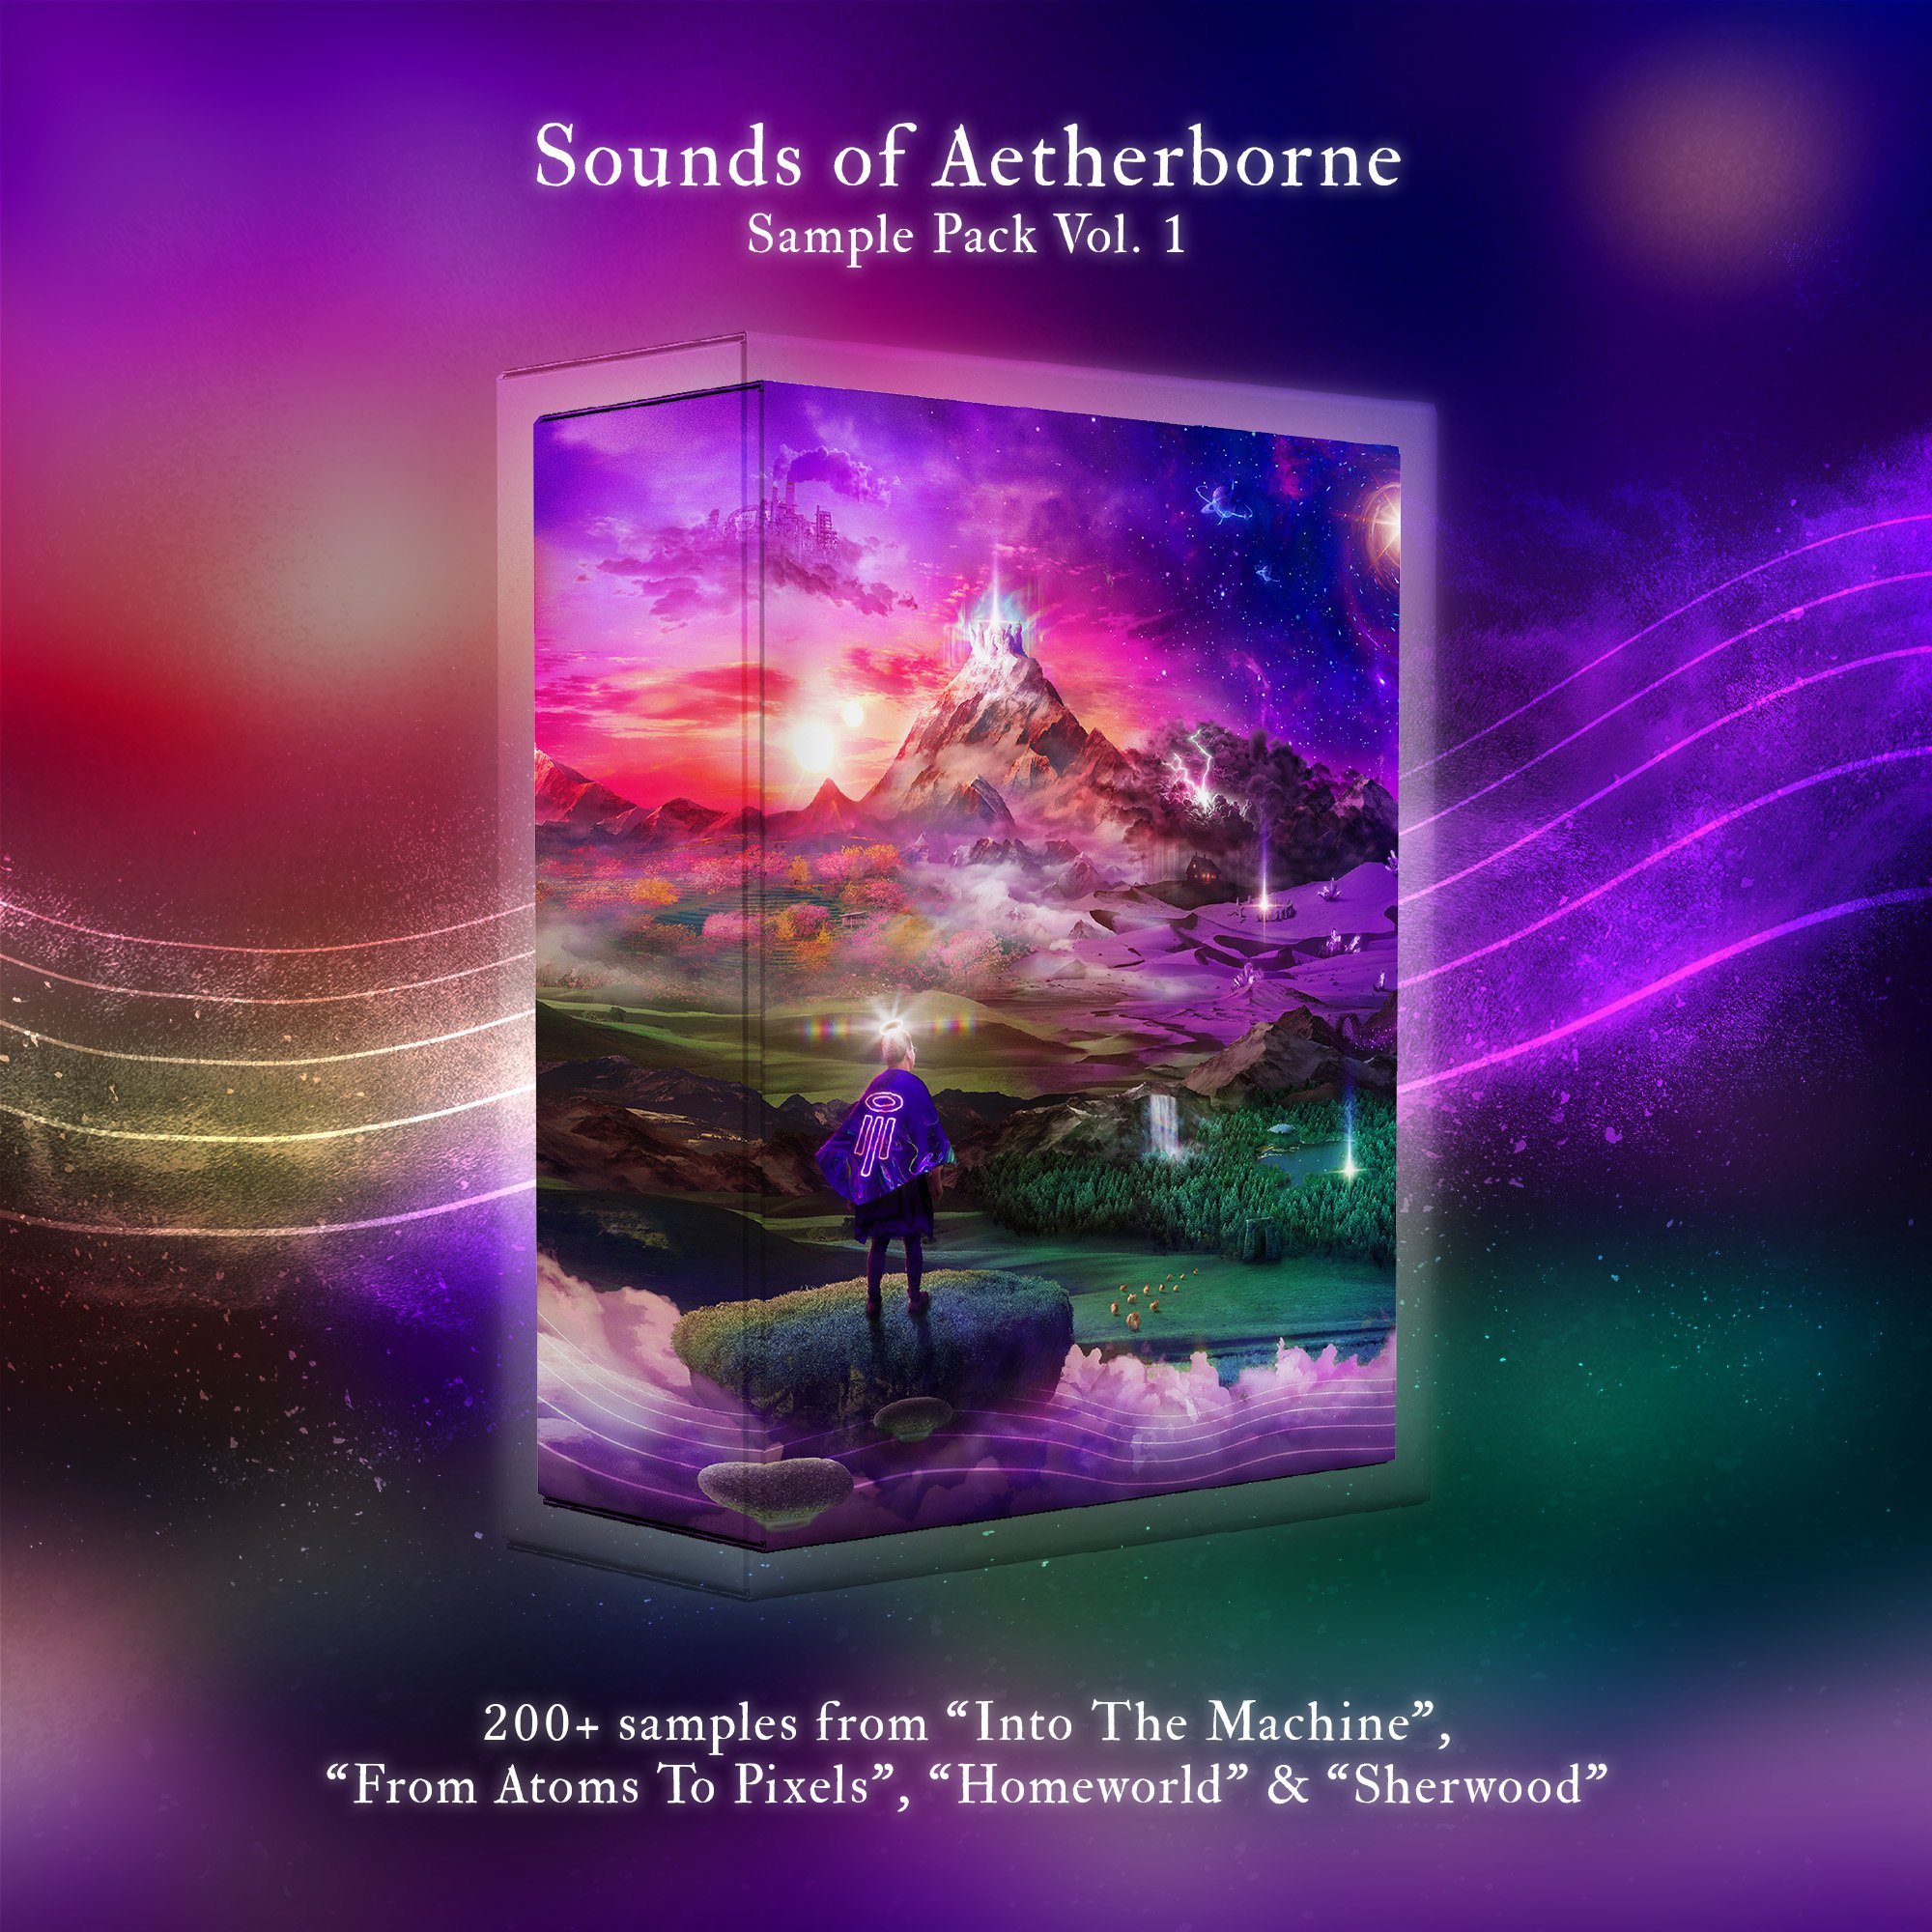 Sounds of Aetherborne Vol 1 Artwork.jpg